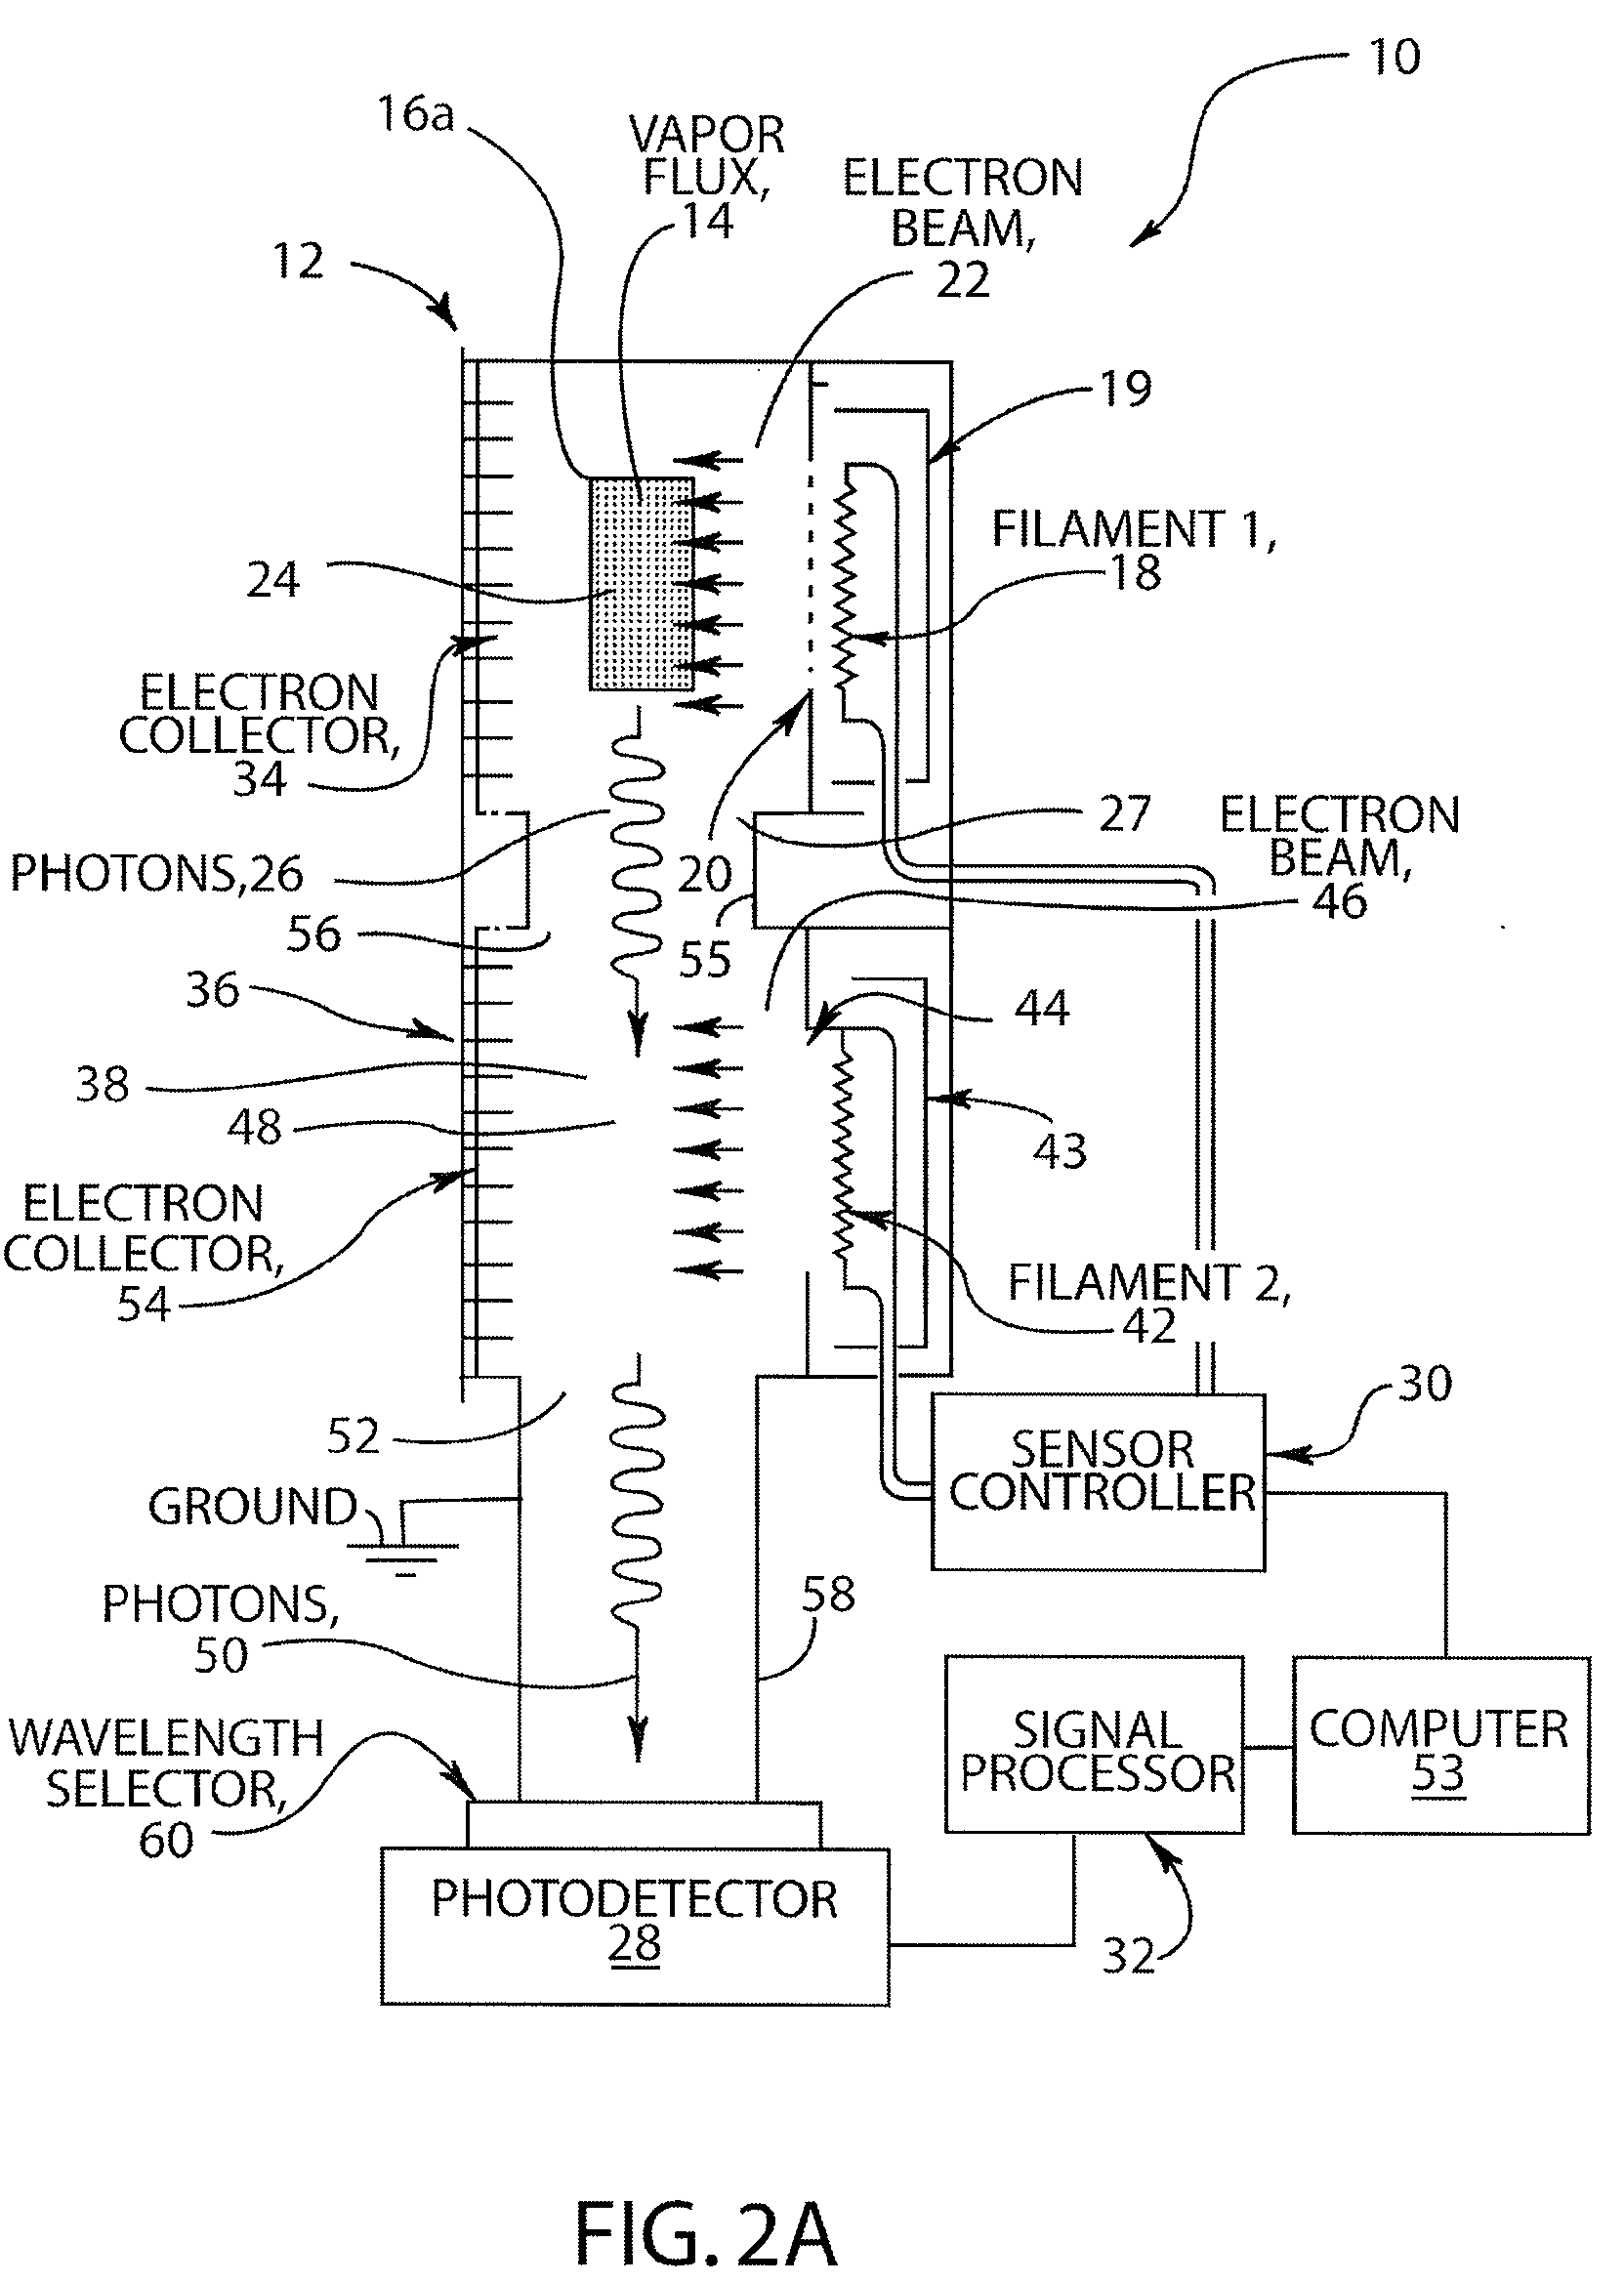 Apparatus and method for measuring vapor flux density